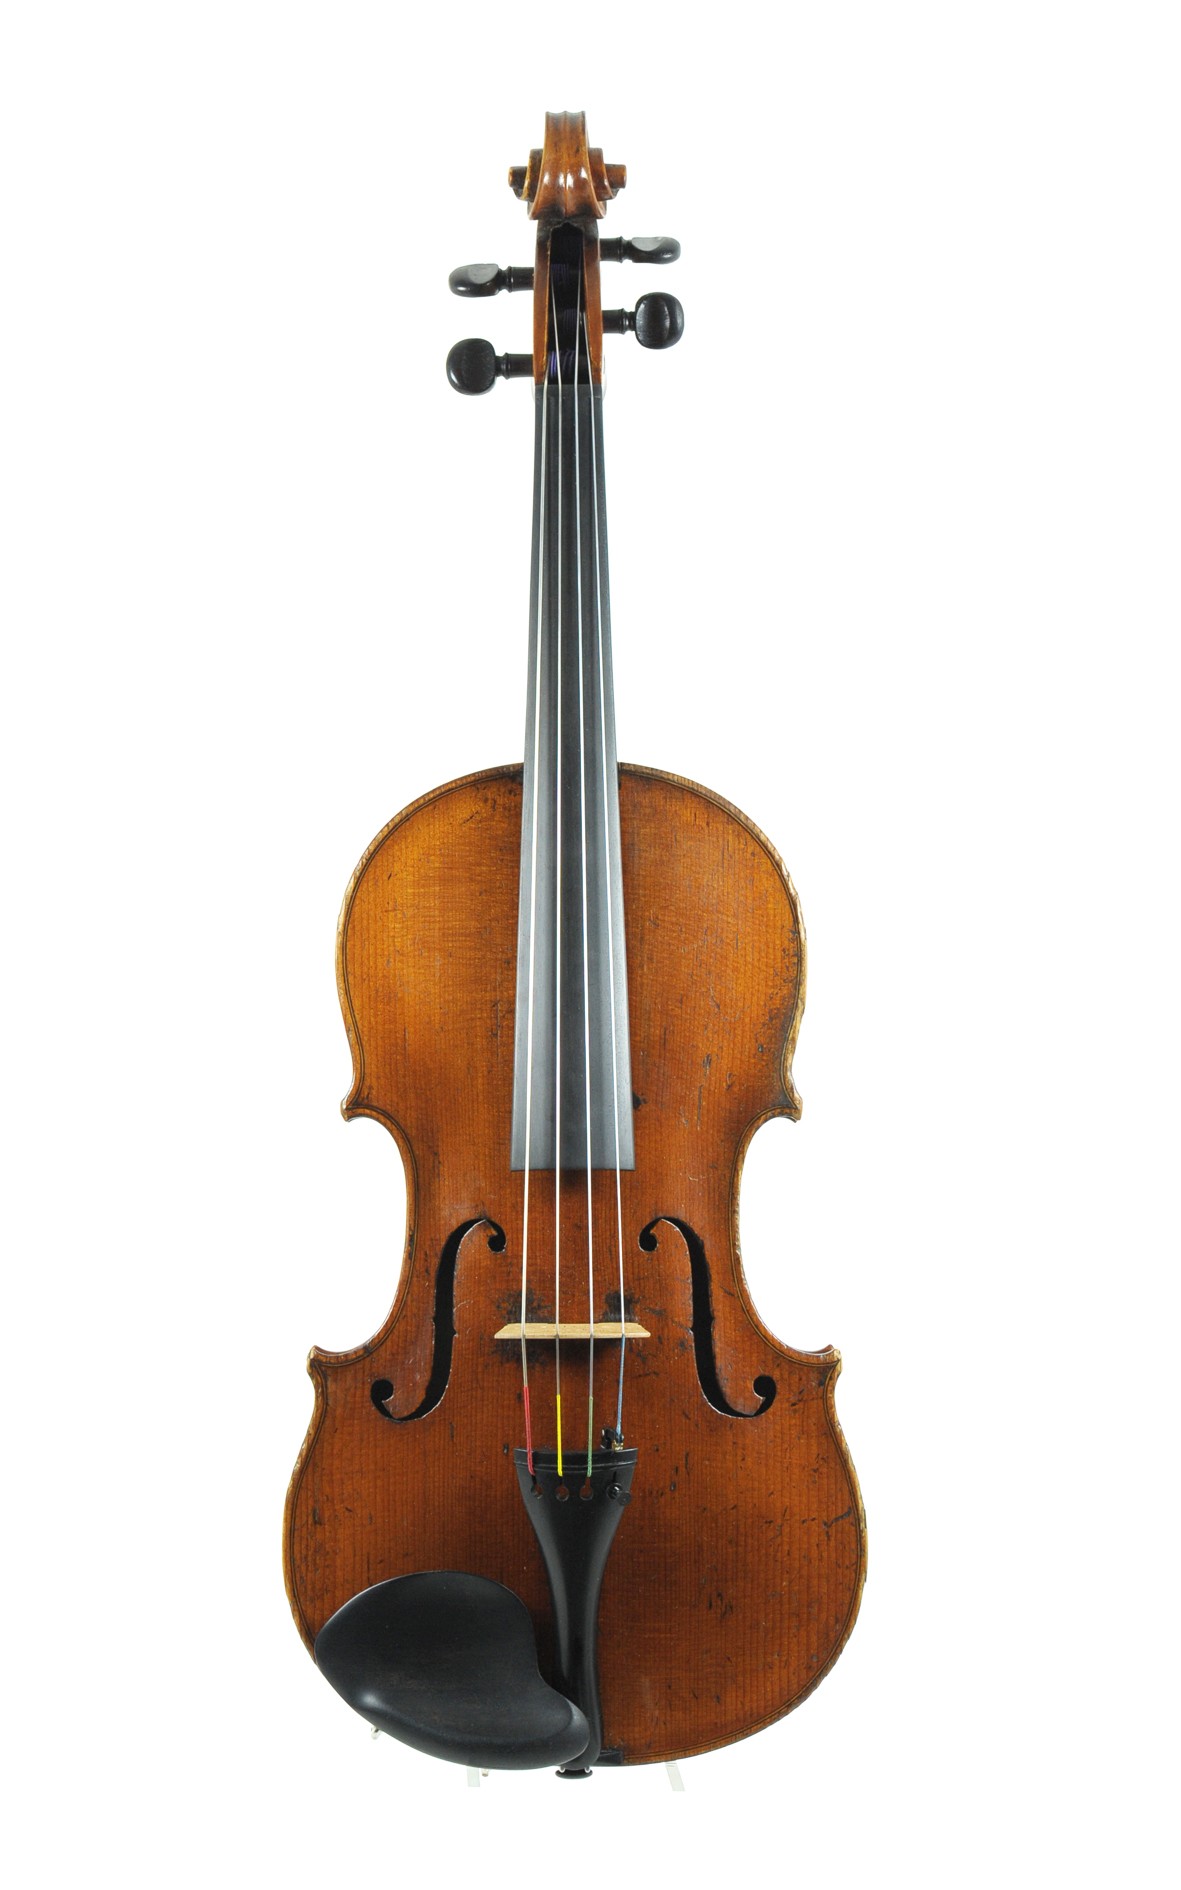 Virtuoso Klingenthal viola, circa 1830 - top